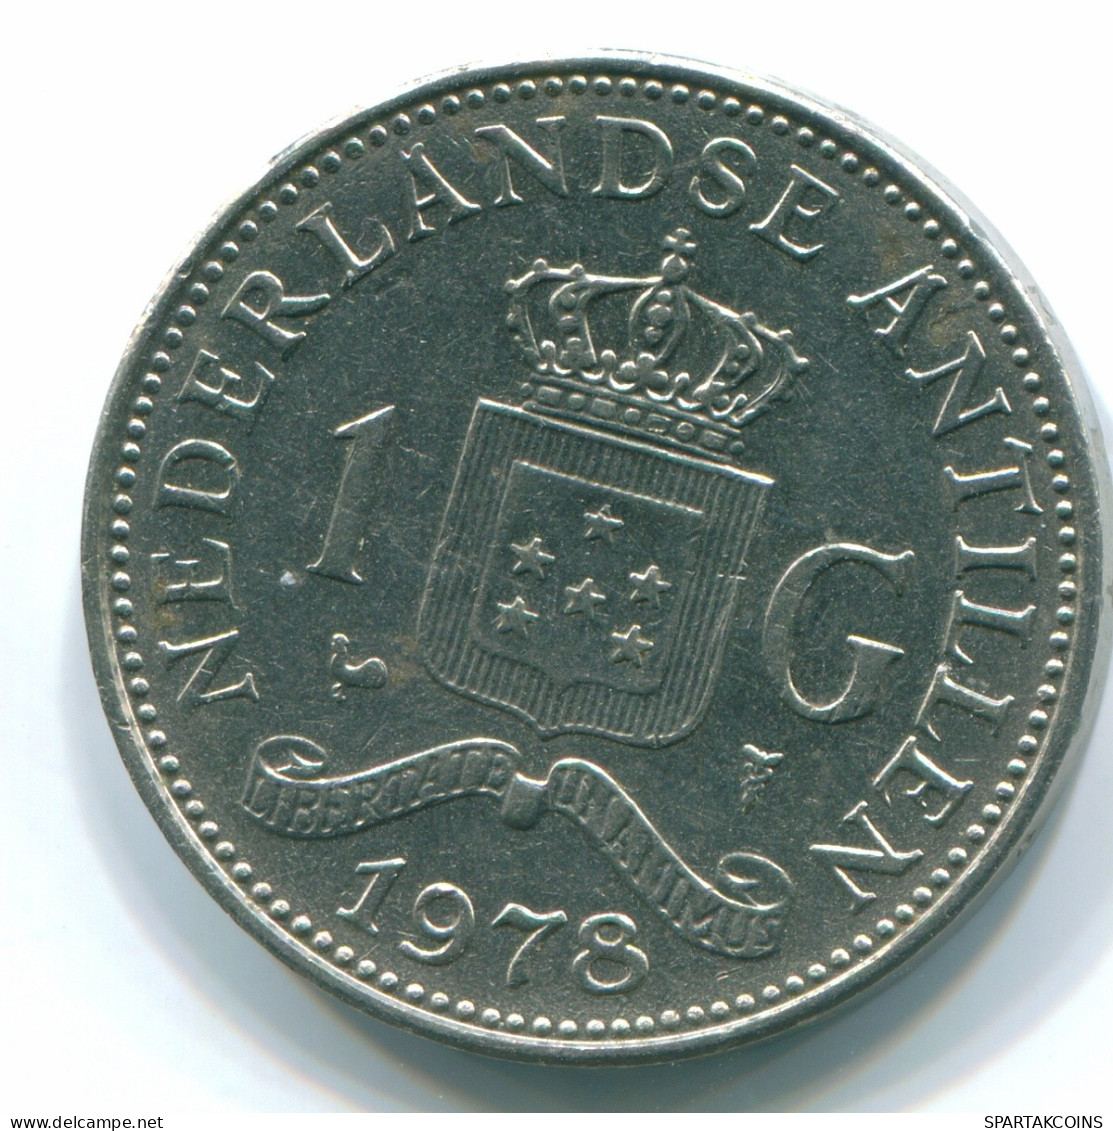 1 GULDEN 1978 NETHERLANDS ANTILLES Nickel Colonial Coin #S12031.U.A - Netherlands Antilles